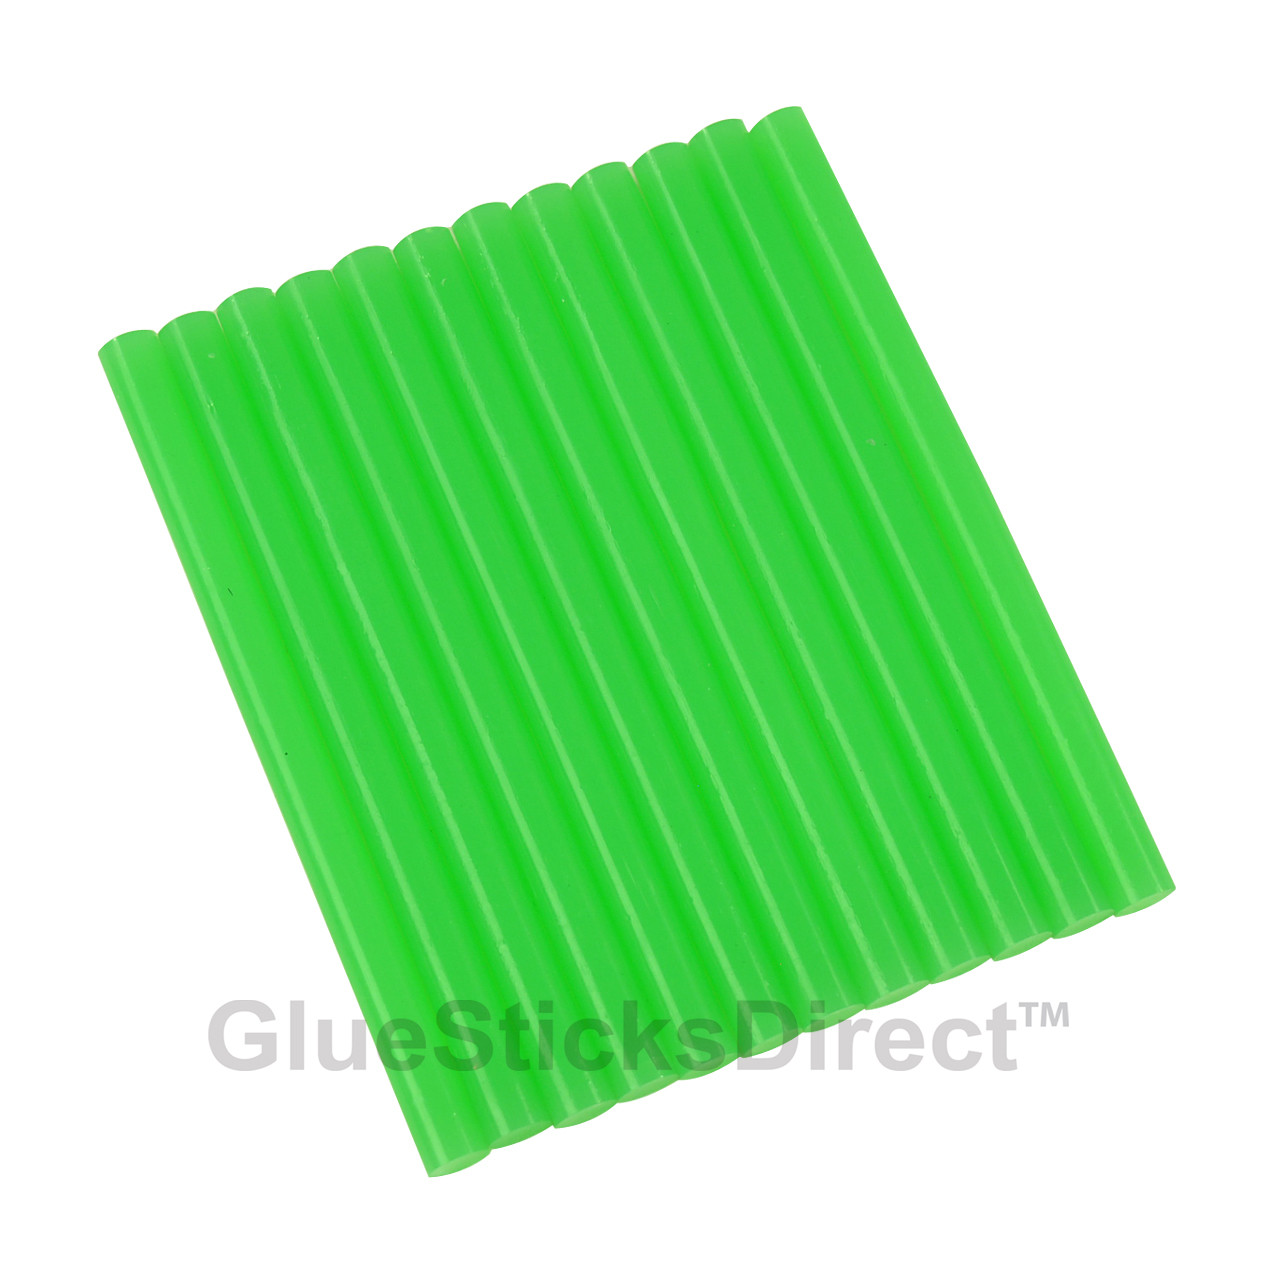 GlueSticksDirect Translucent Pink Glue Stick mini X 4" 12 sticks